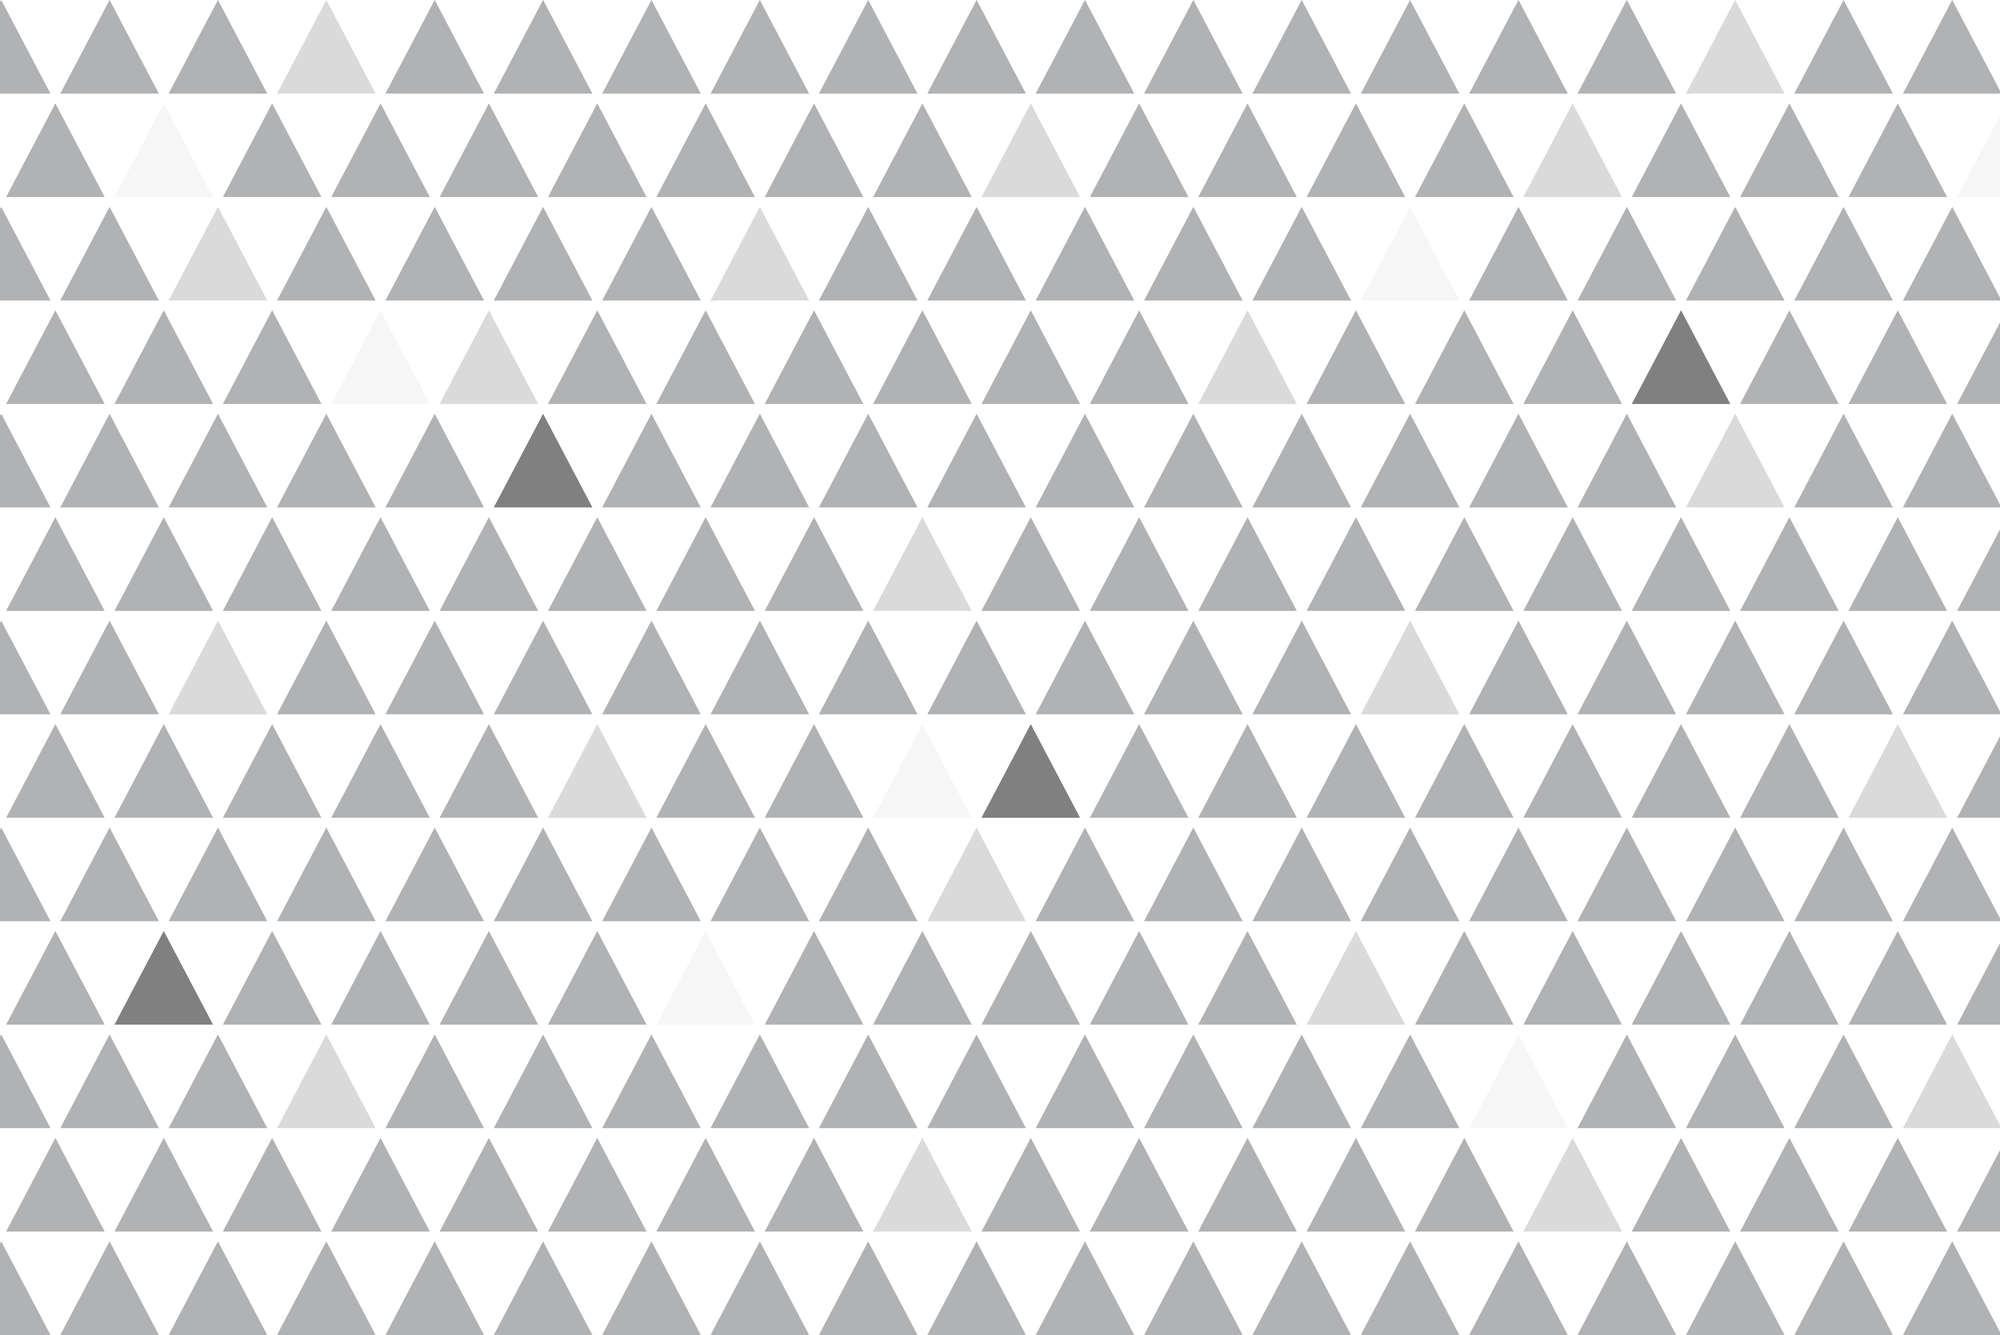             Design mural small triangles grey on premium smooth non-woven
        